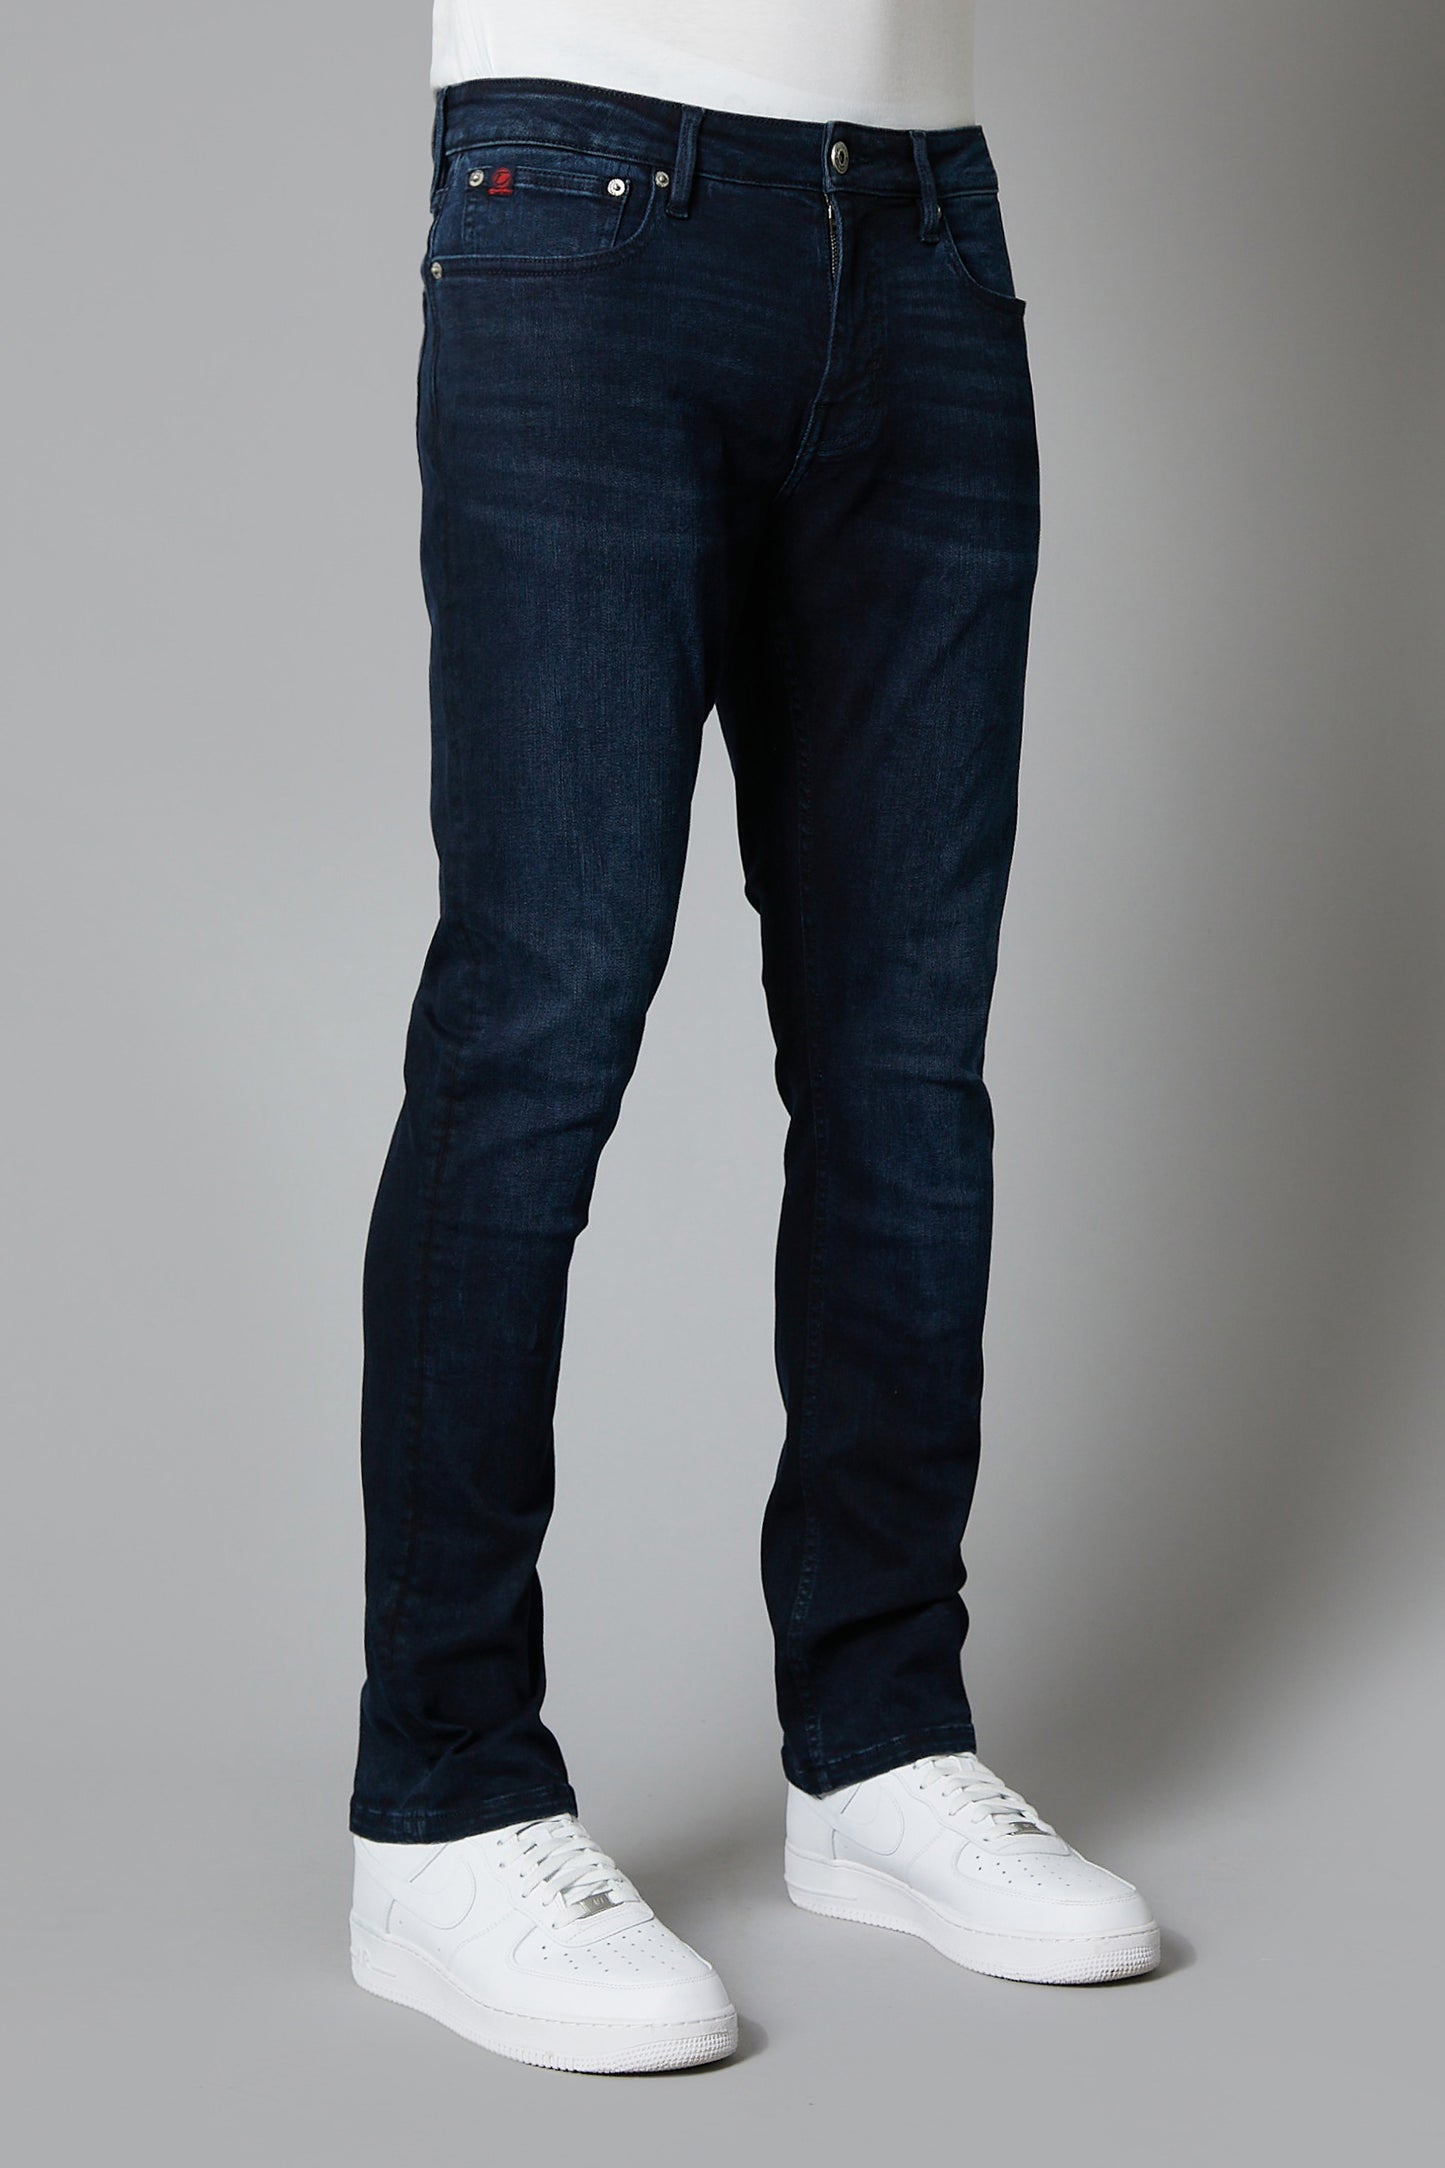 DML Jeans Alaska mens Ink Blue straight leg denim jeans front view close up